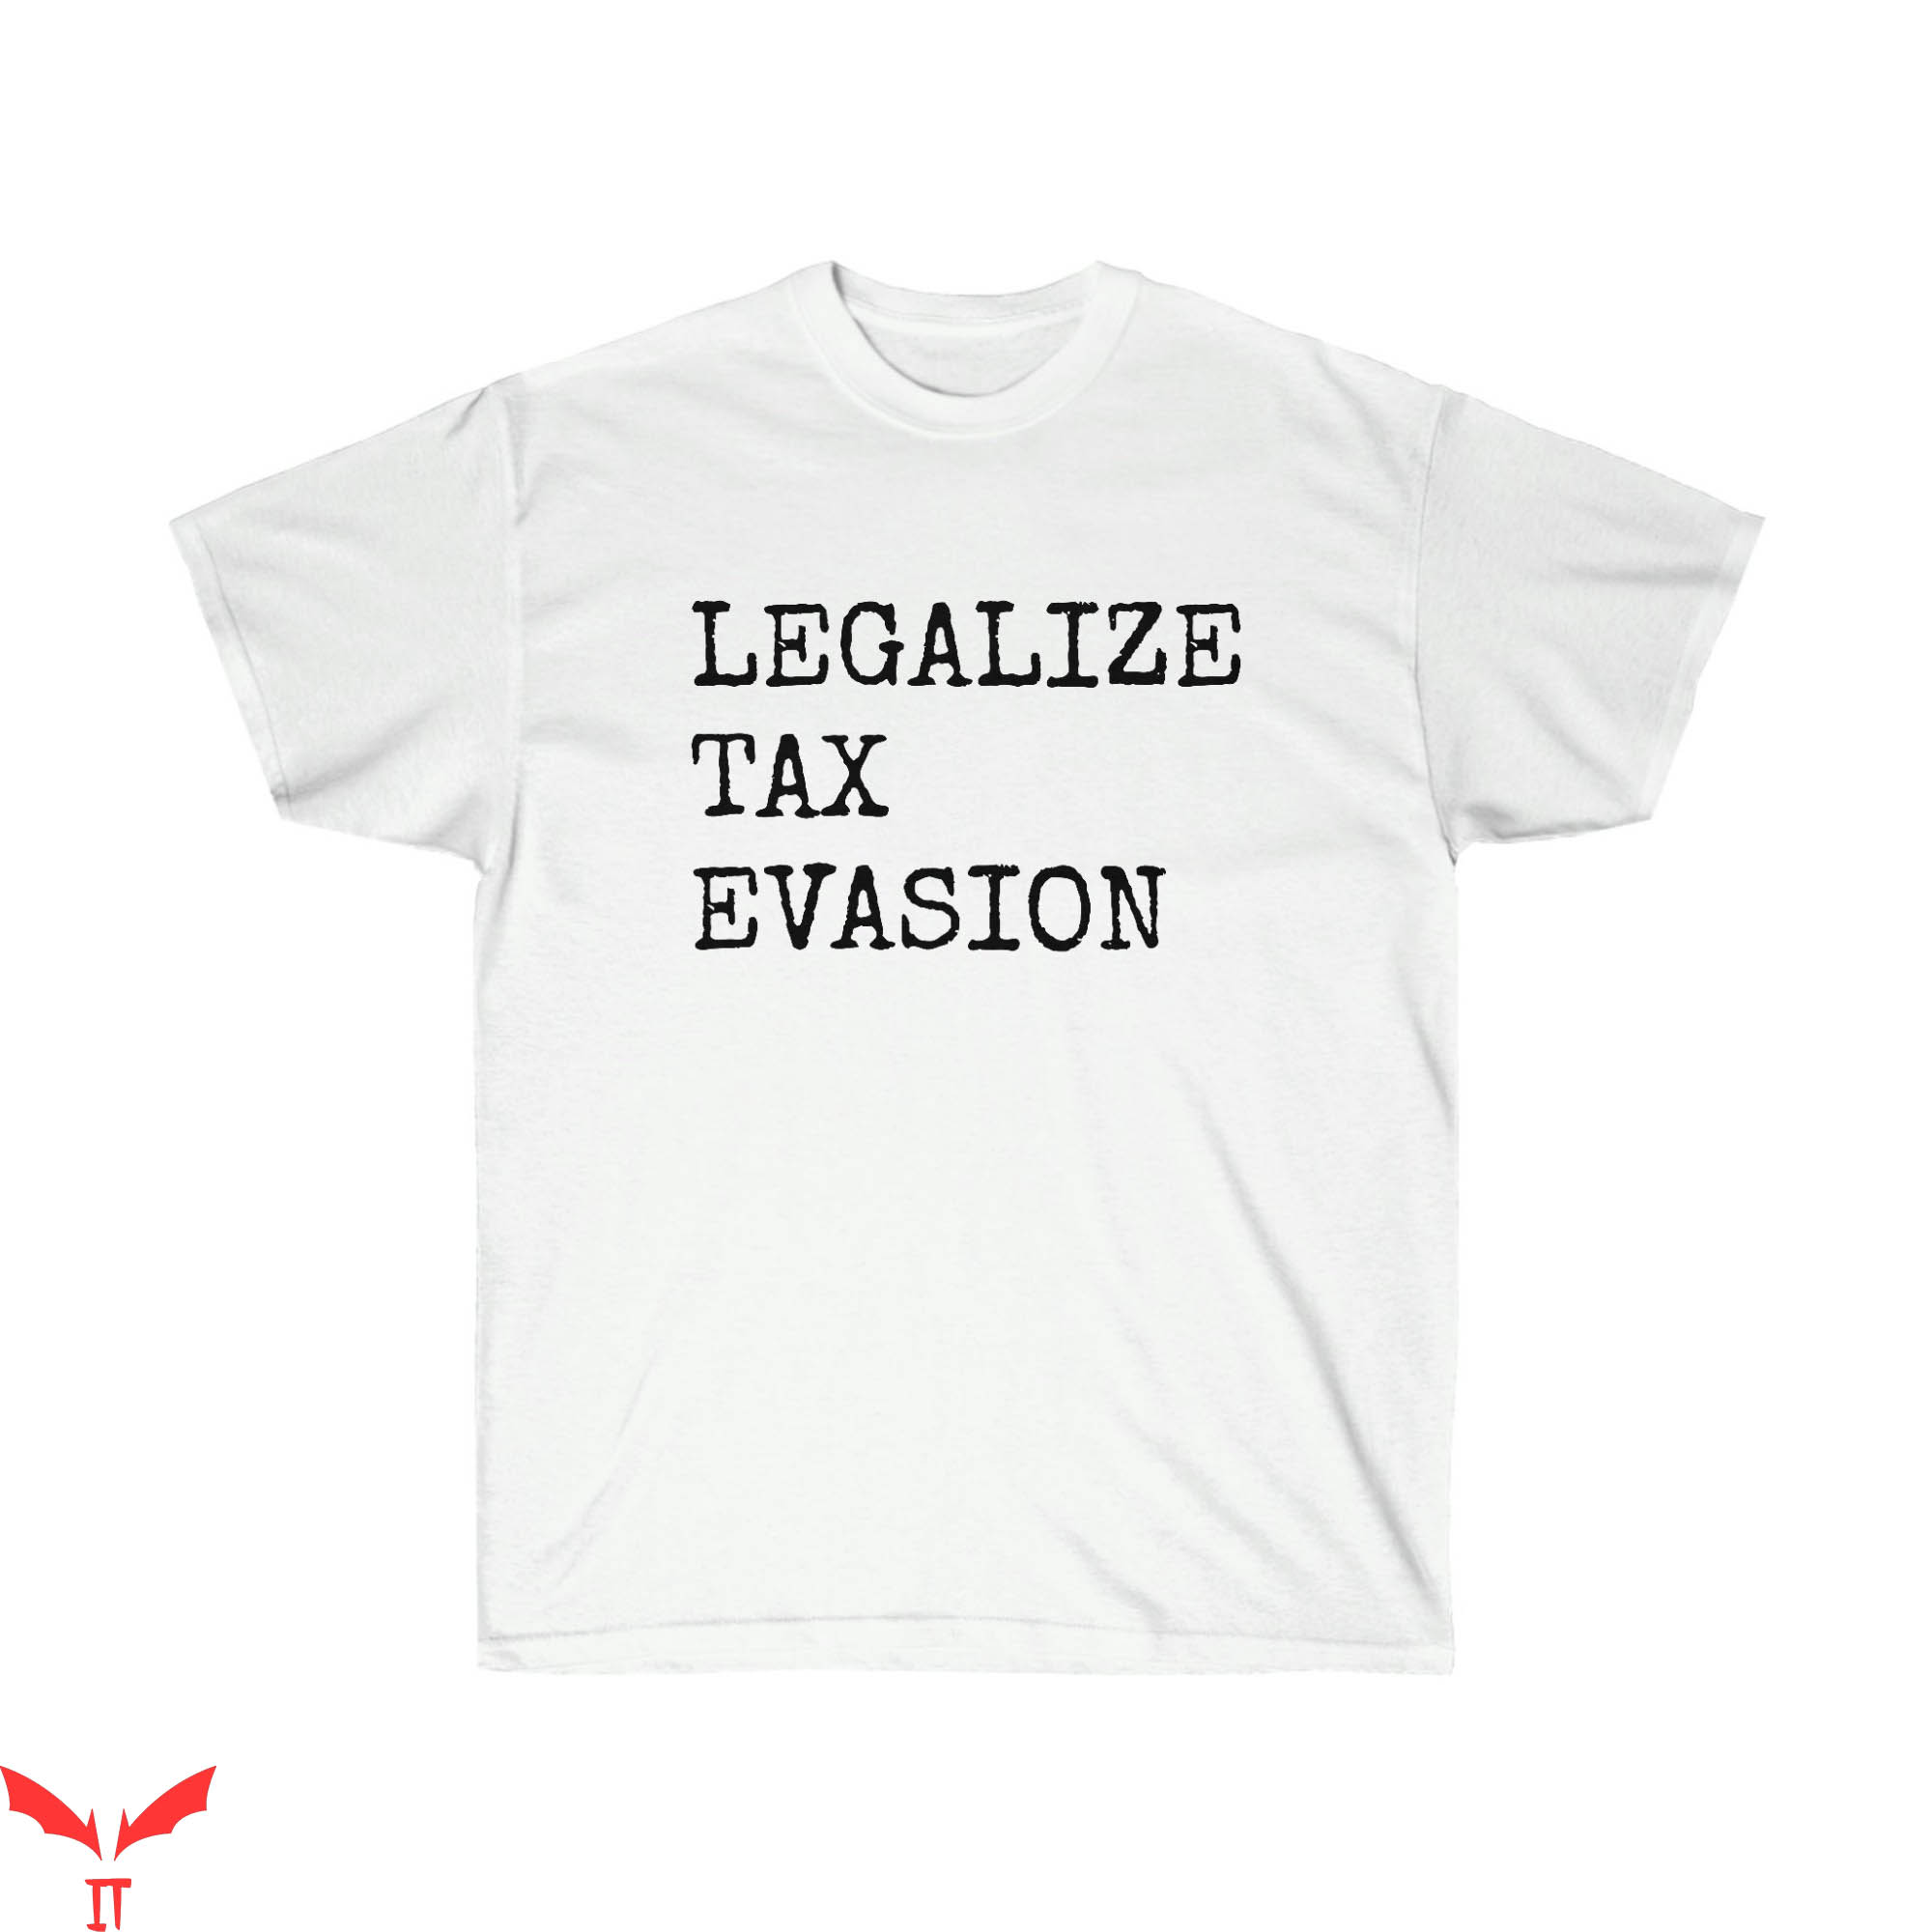 Tax Evasion T-Shirt Legalize Funny Humor Meme Tee Shirt